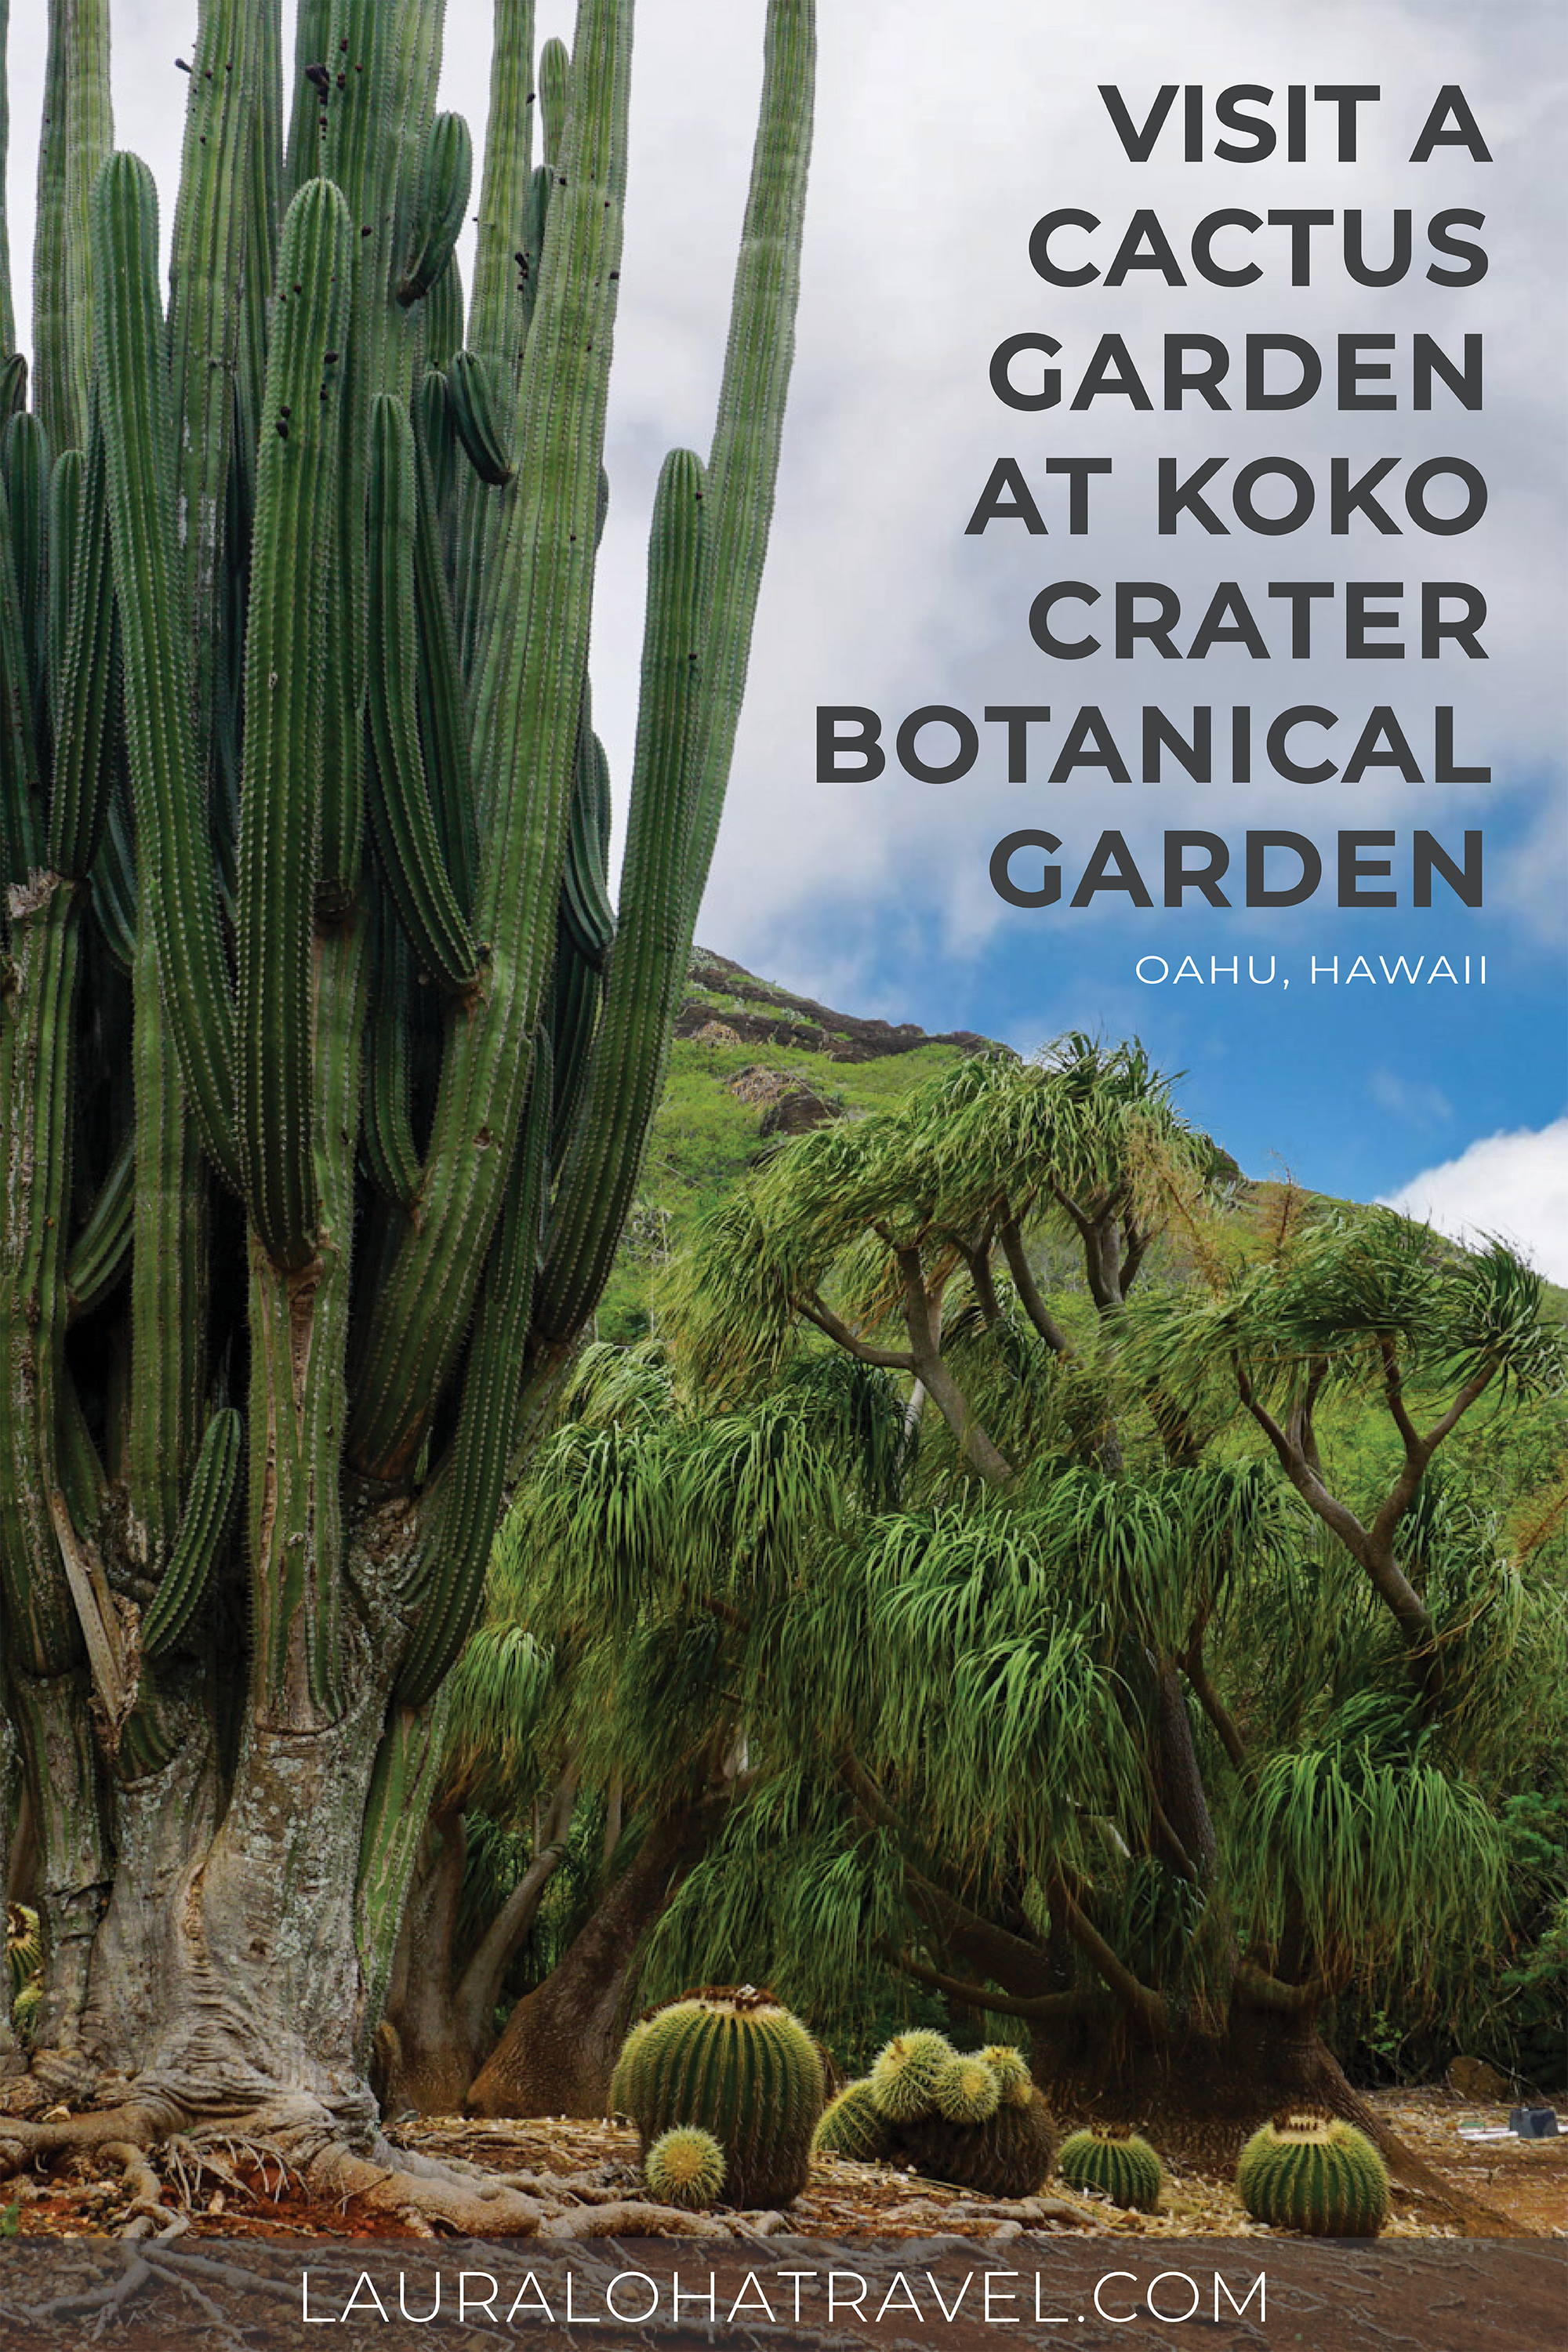 Pinterest Image for Koko Botanical Garden featuring cactuses